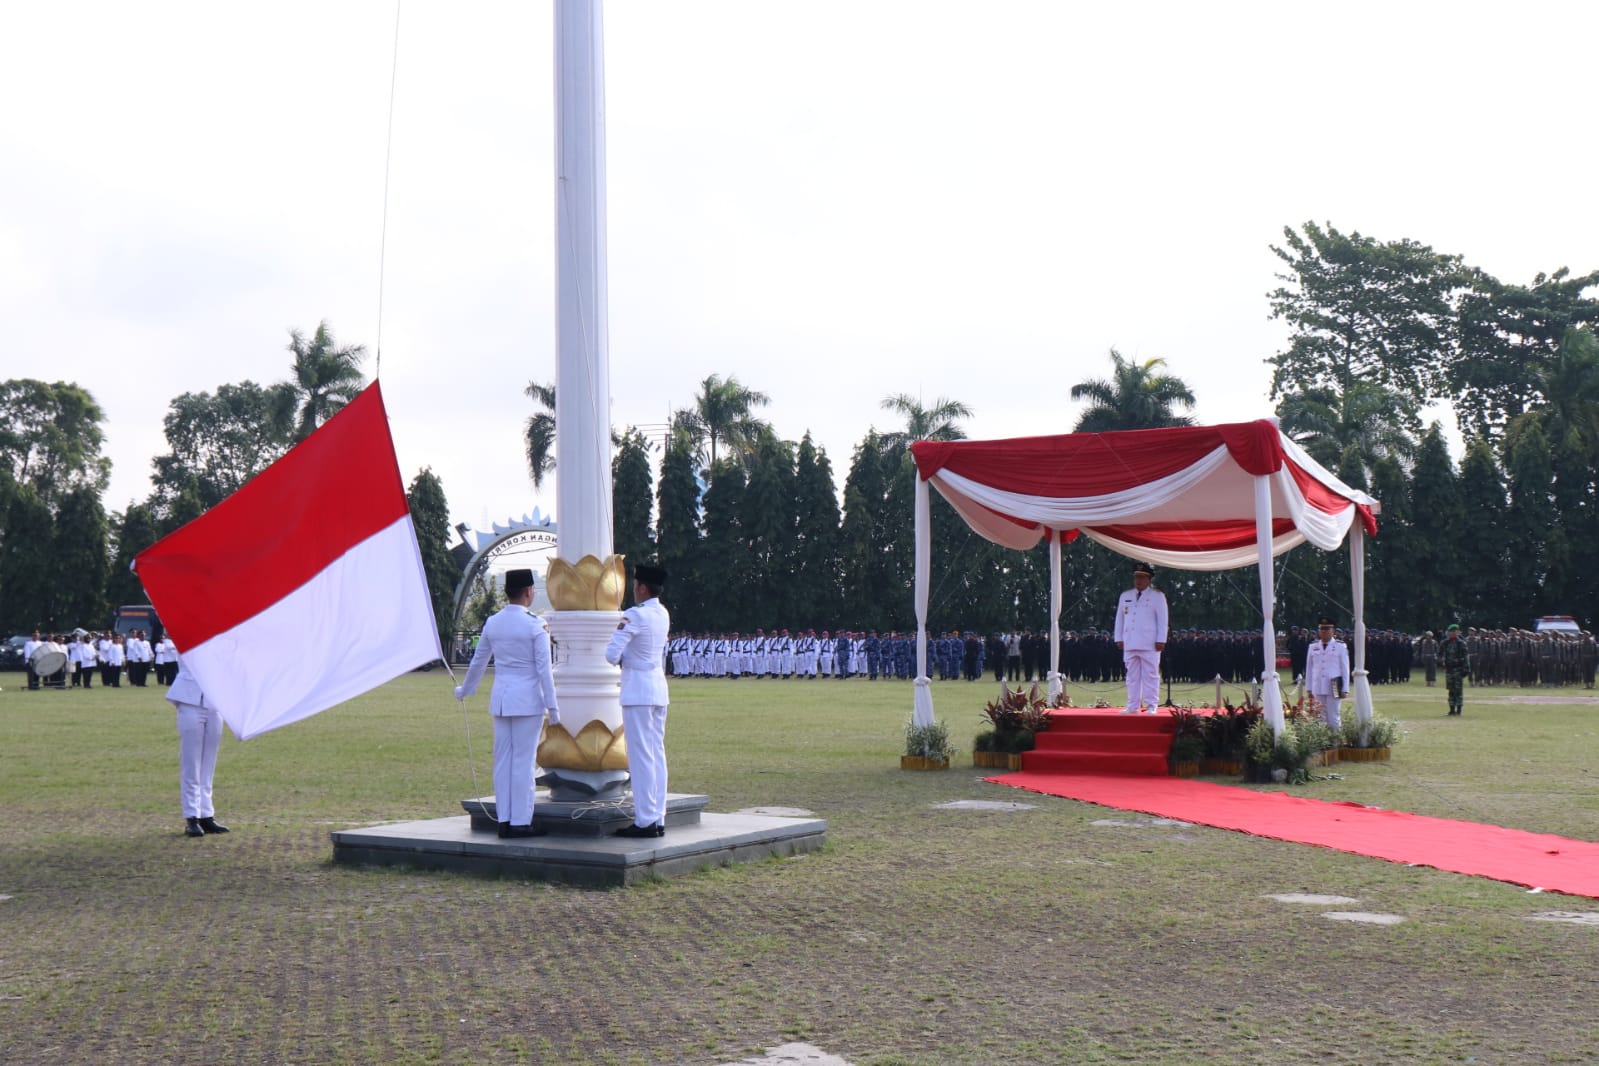 Pemprov Lampung Gelar Upacara Peringatan HUT ke-59 Provinsi Lampung, Gubernur Harapkan Sinergi Seluruh Elemen 